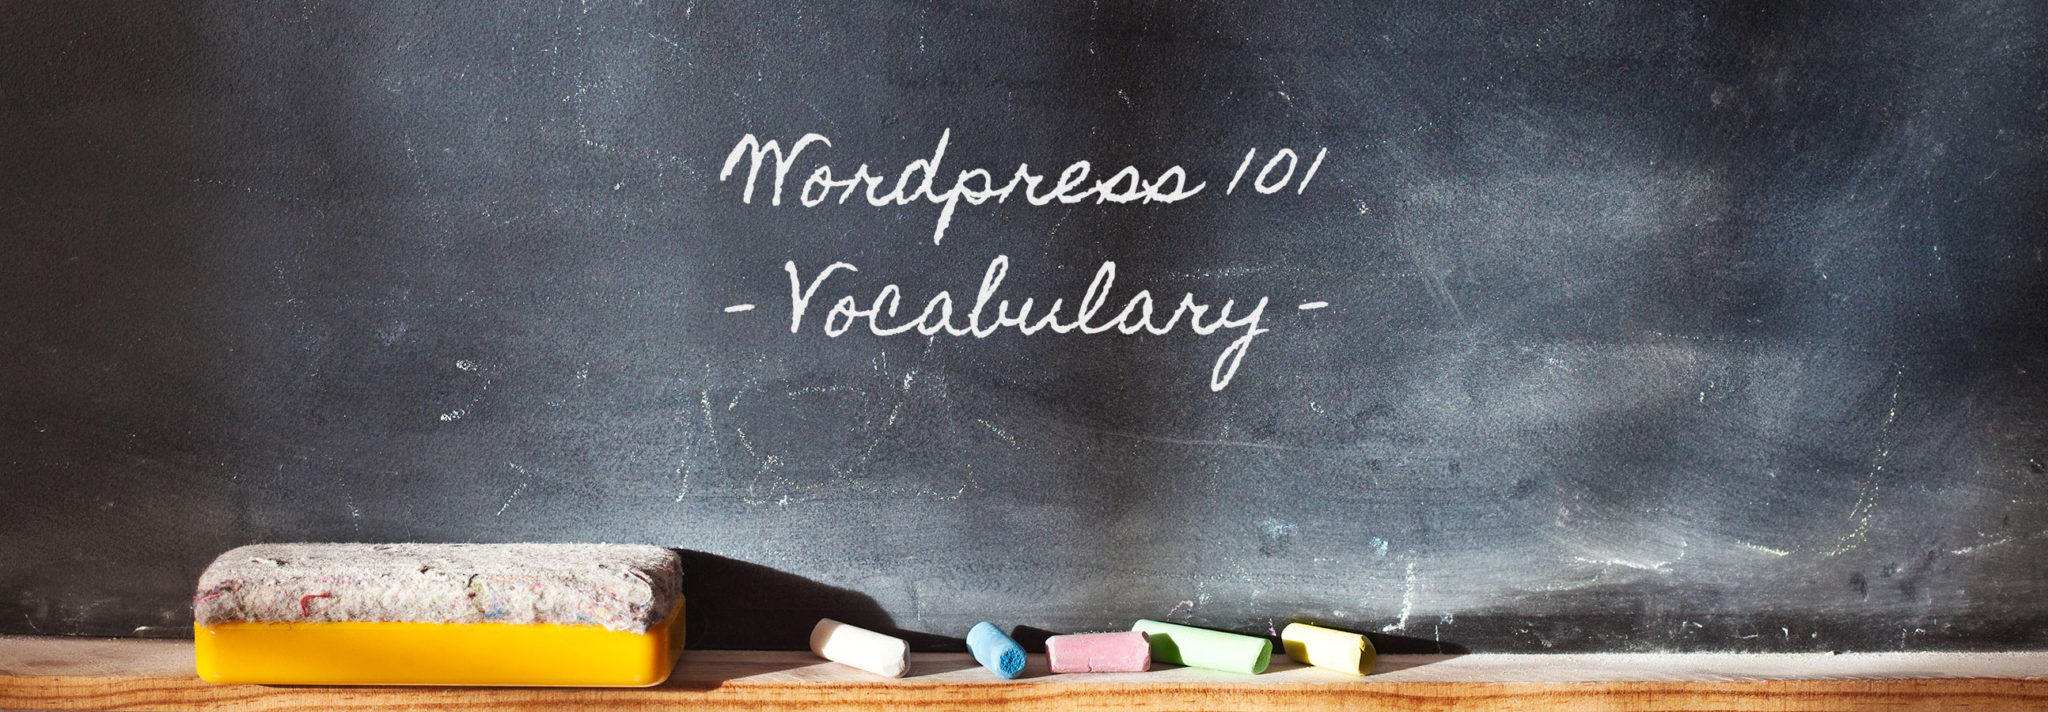 WordPress 101 - Vocabulary